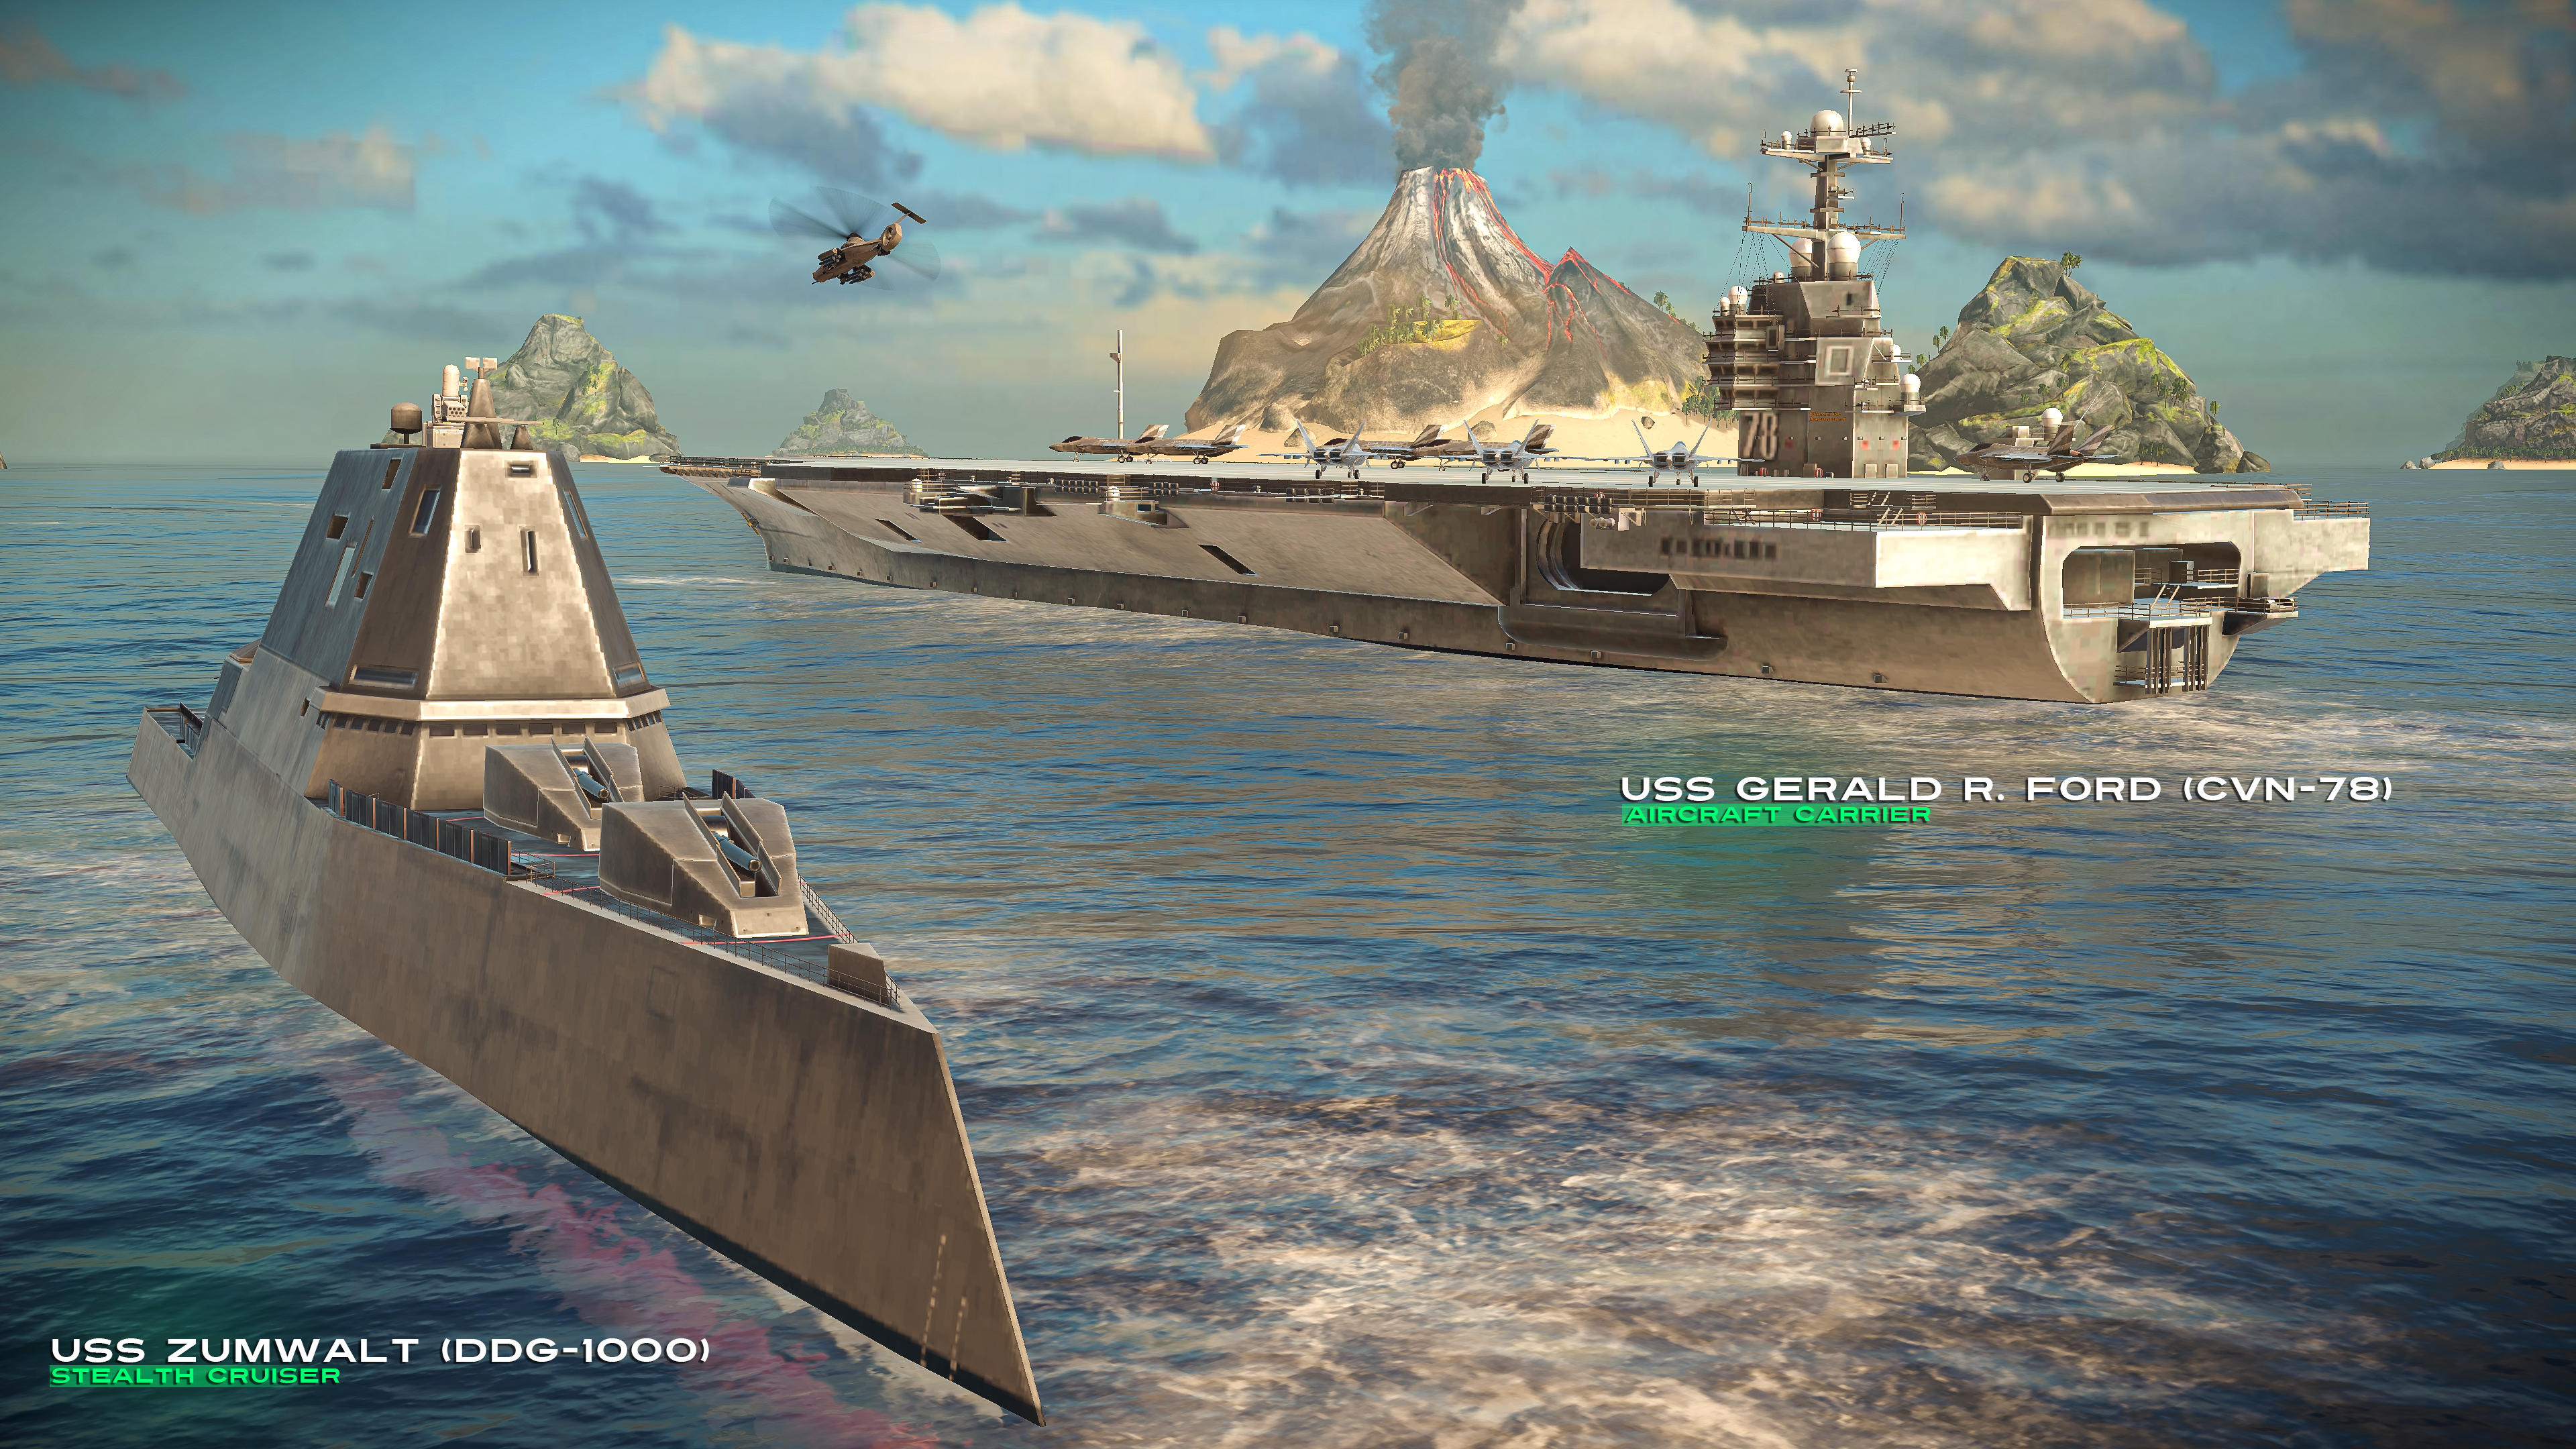 realistic naval games in development